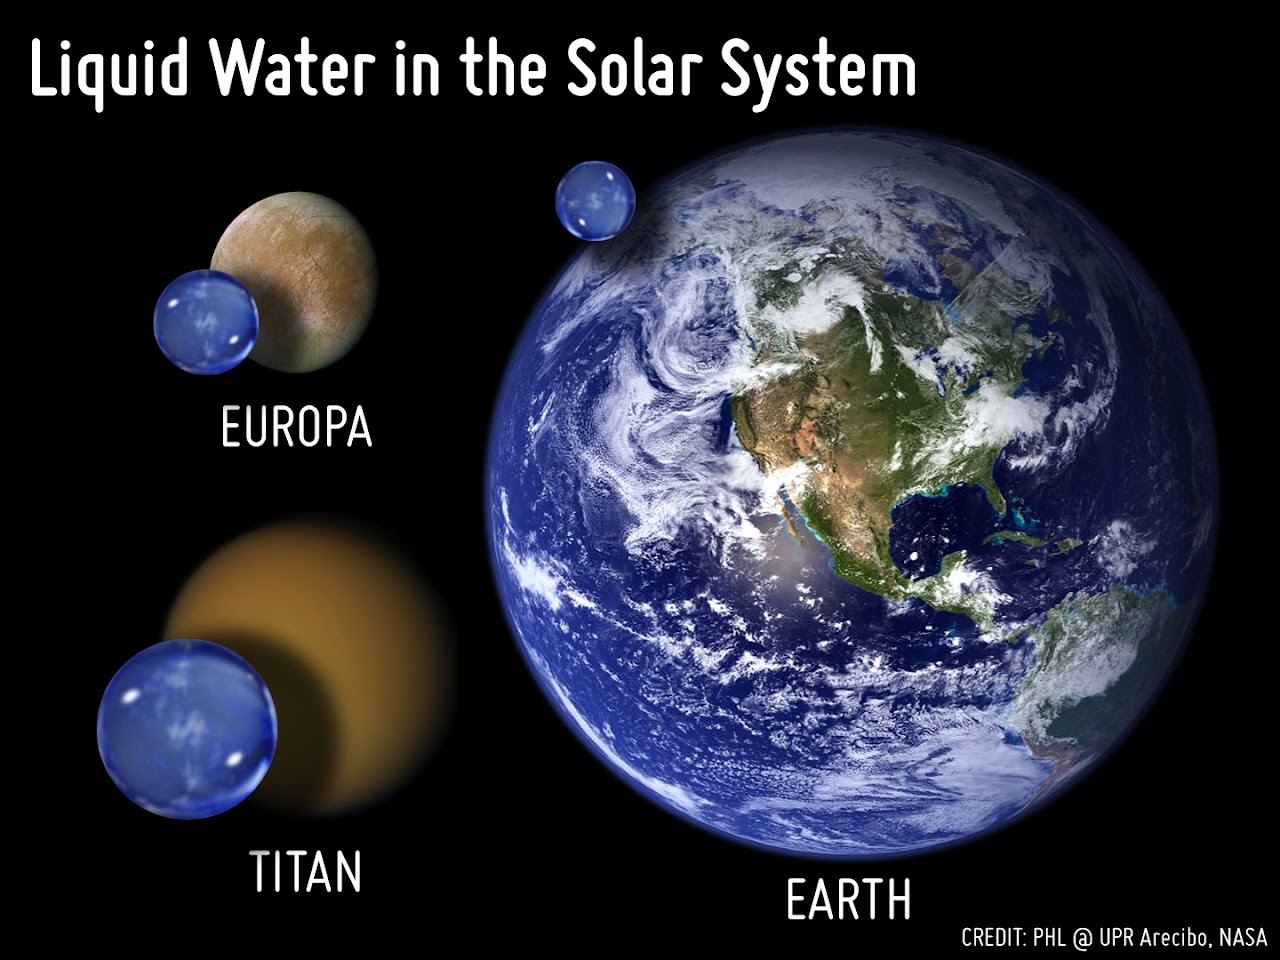 liquid water amounts on Europa, Titan, Earth